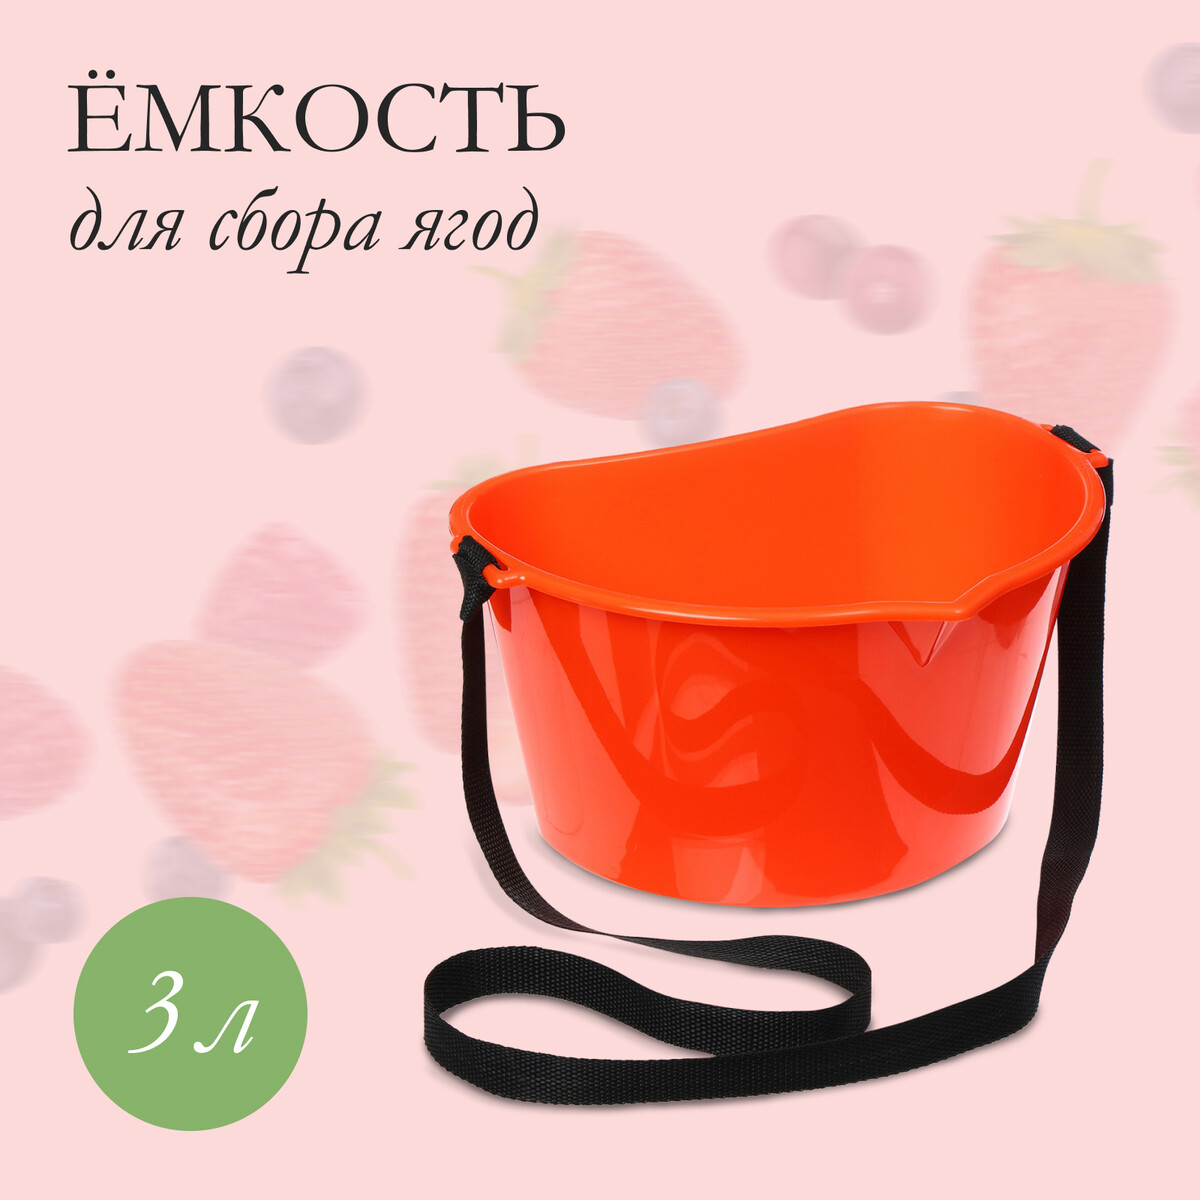 Ёмкость для сбора ягод, 3 л, оранжевая миска 2 х 200 мл оранжевая